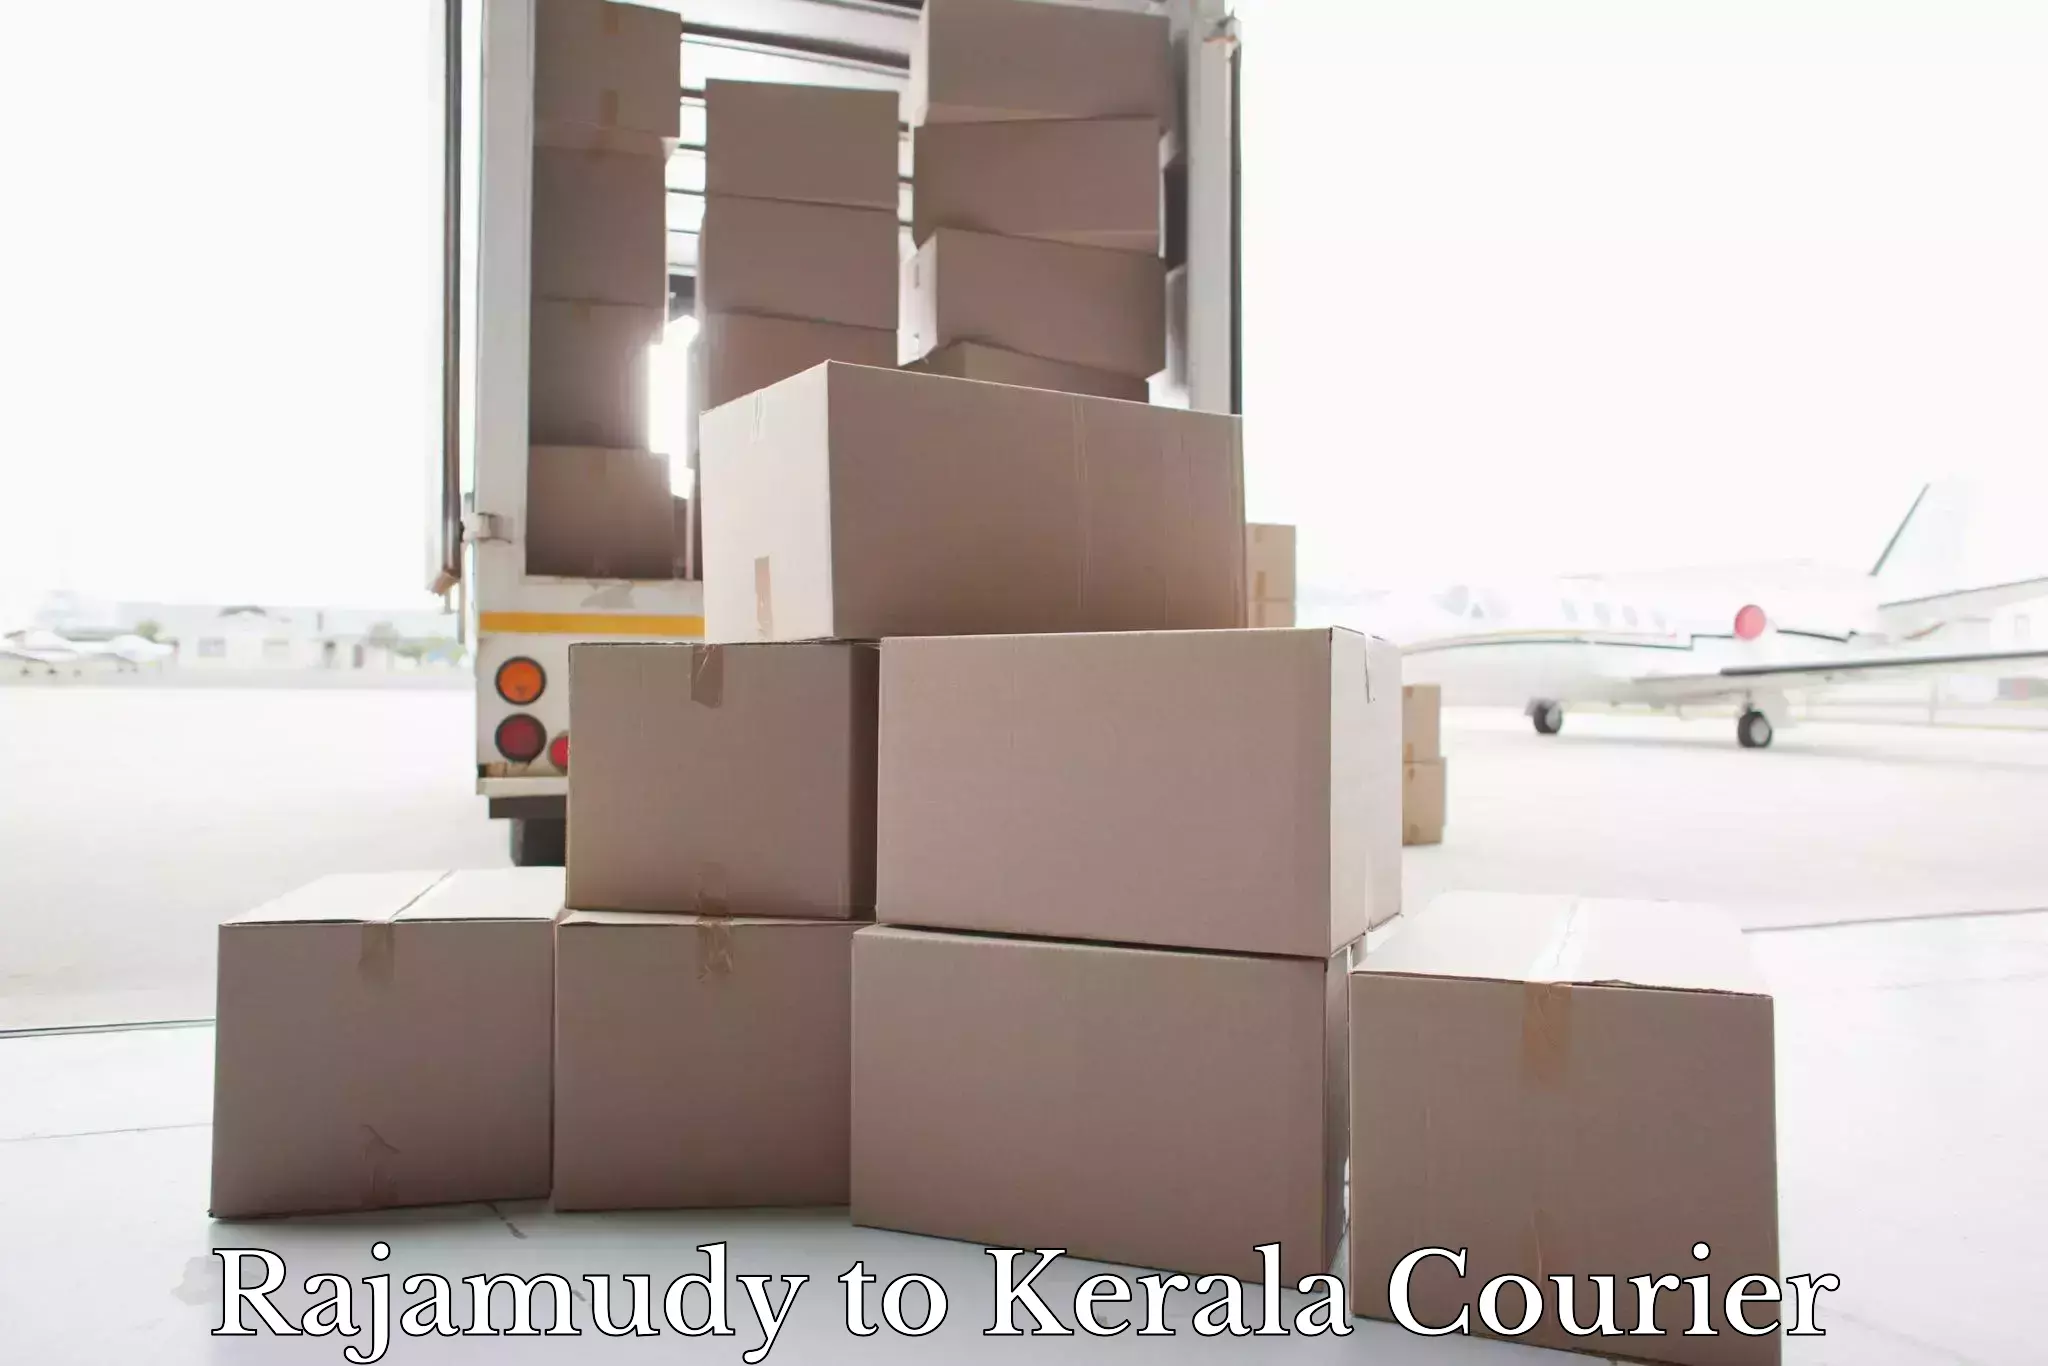 Doorstep luggage collection Rajamudy to Kothanalloor